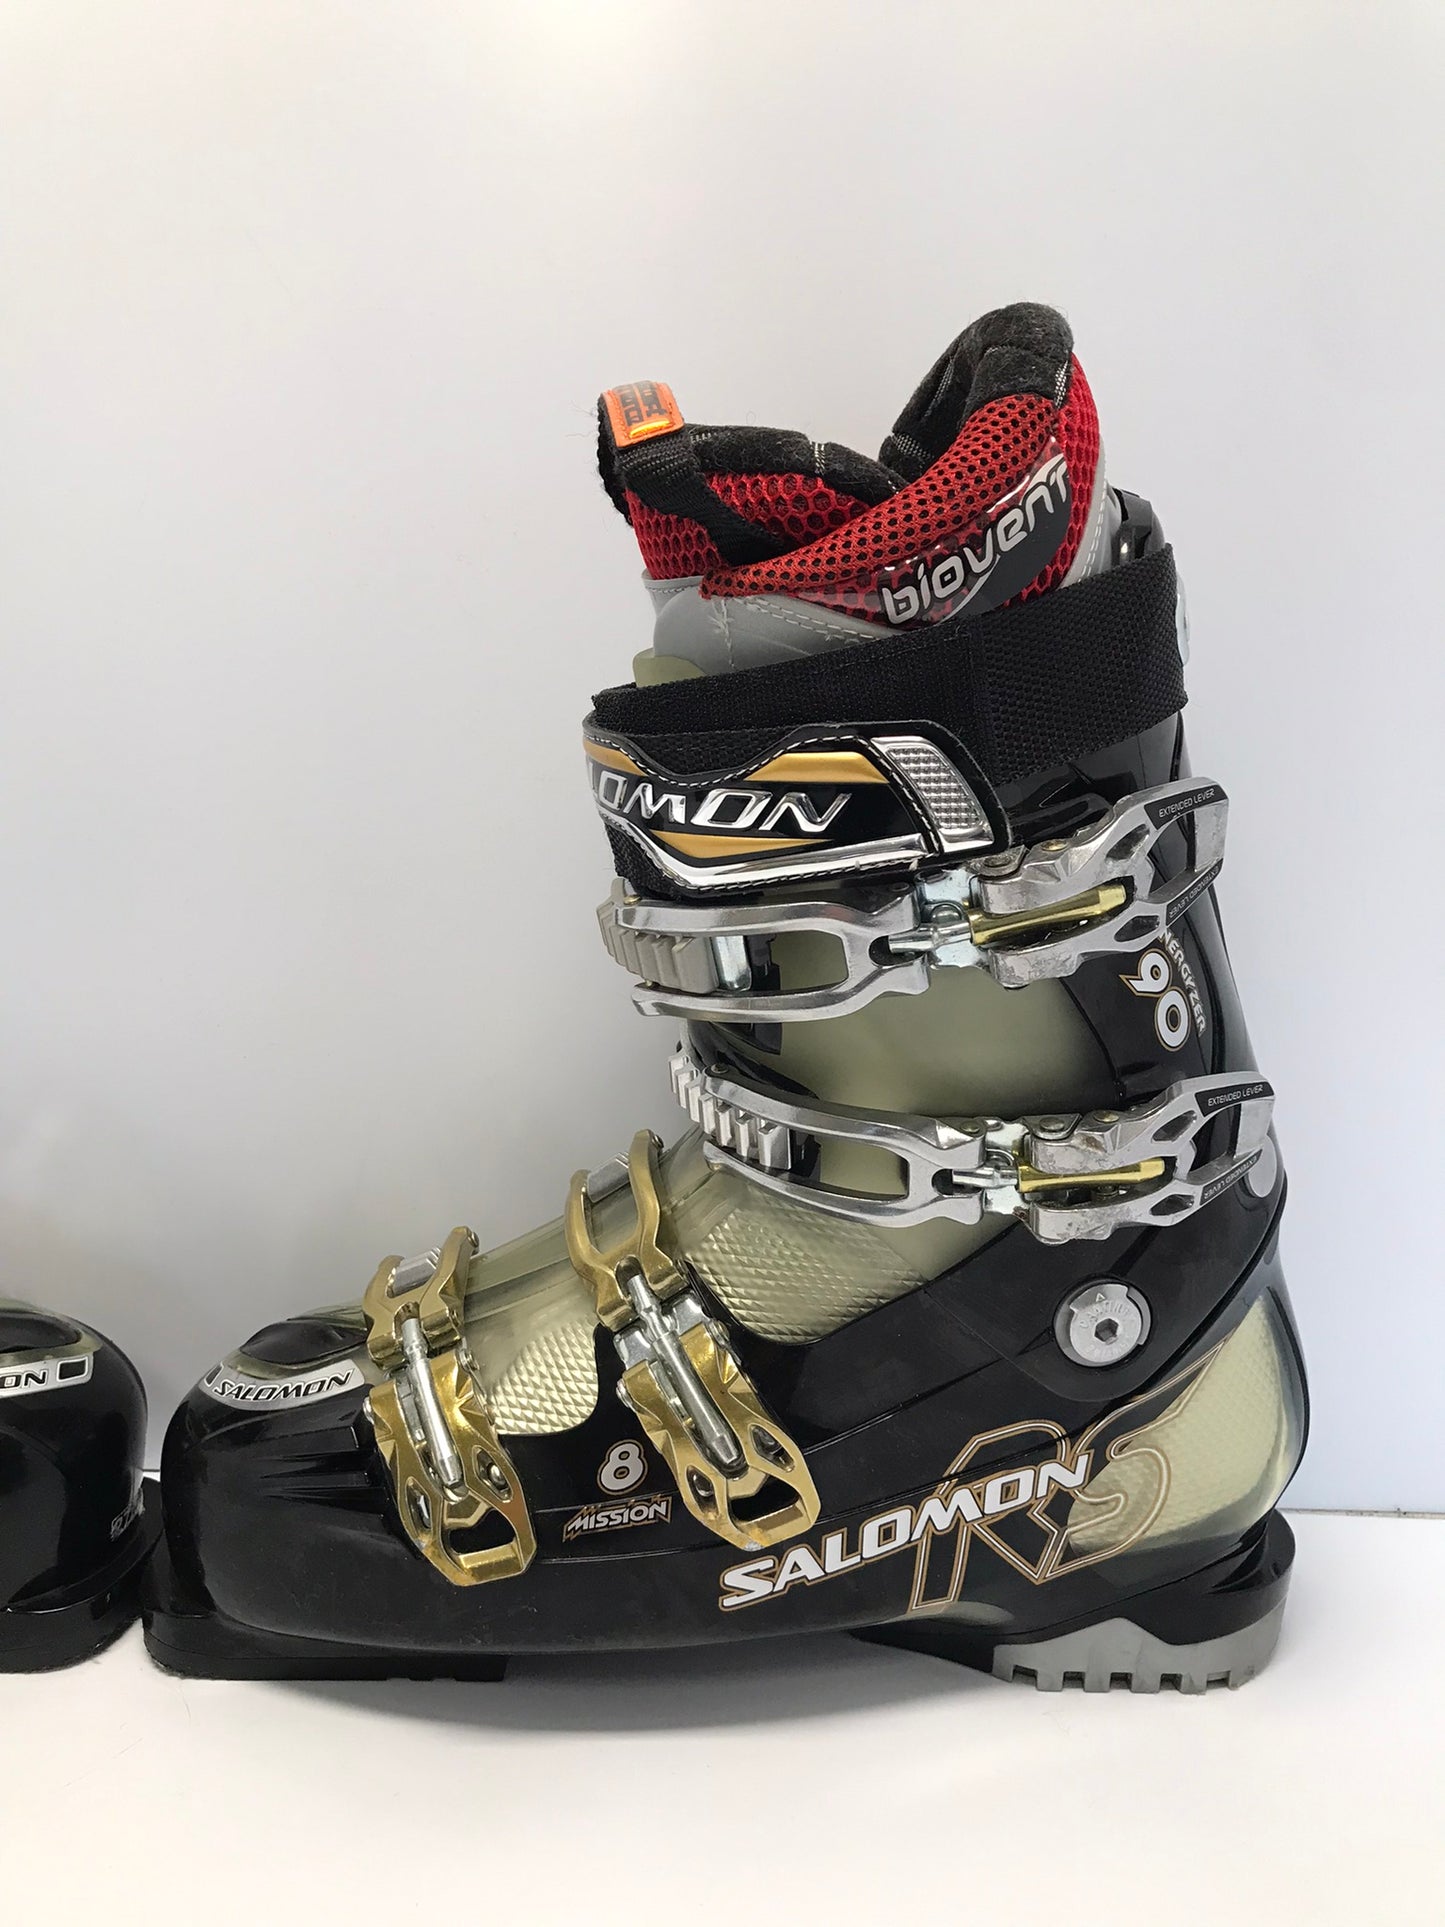 Ski Boots Mondo Size 27.5 Men's Size 9.5 Ladies Size 10.5 318mm Salmon Mission 8 Black Gold Outstanding Quality